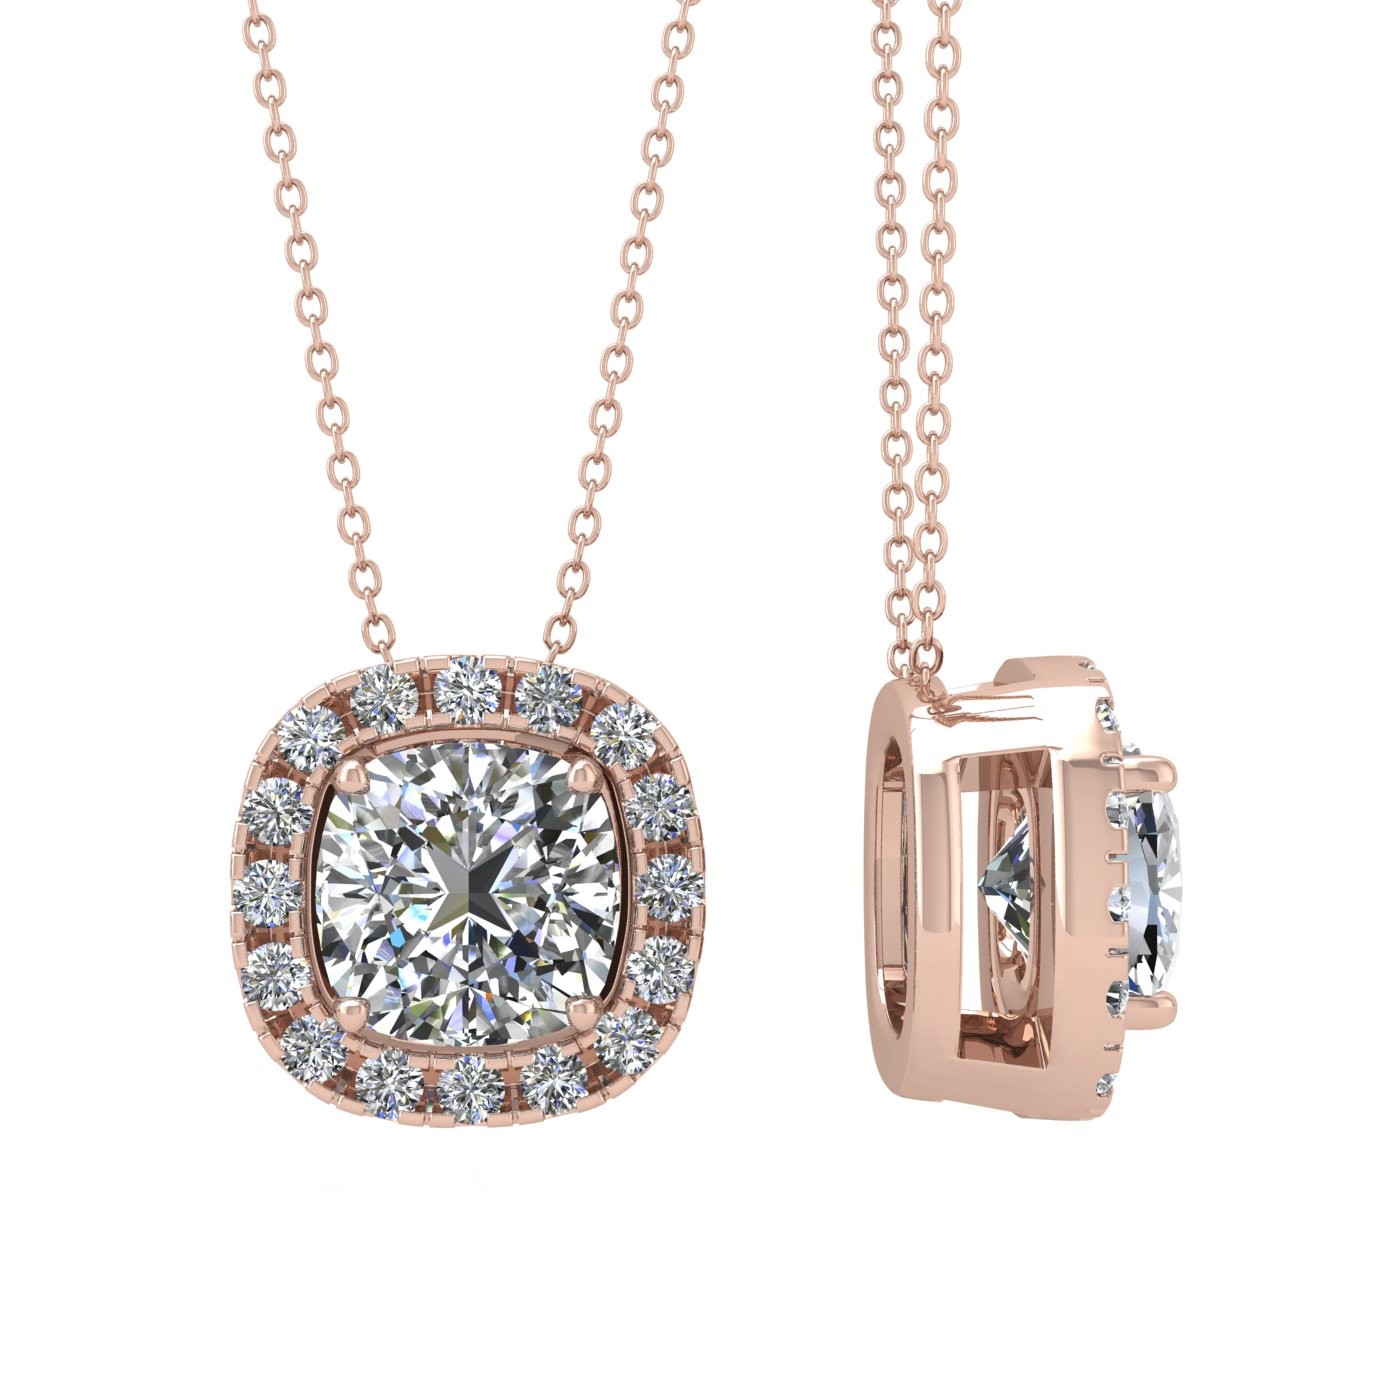 18k rose gold  1,5 ct 4 prongs cushion shape diamond pendant with diamond pavÉ set halo Photos & images